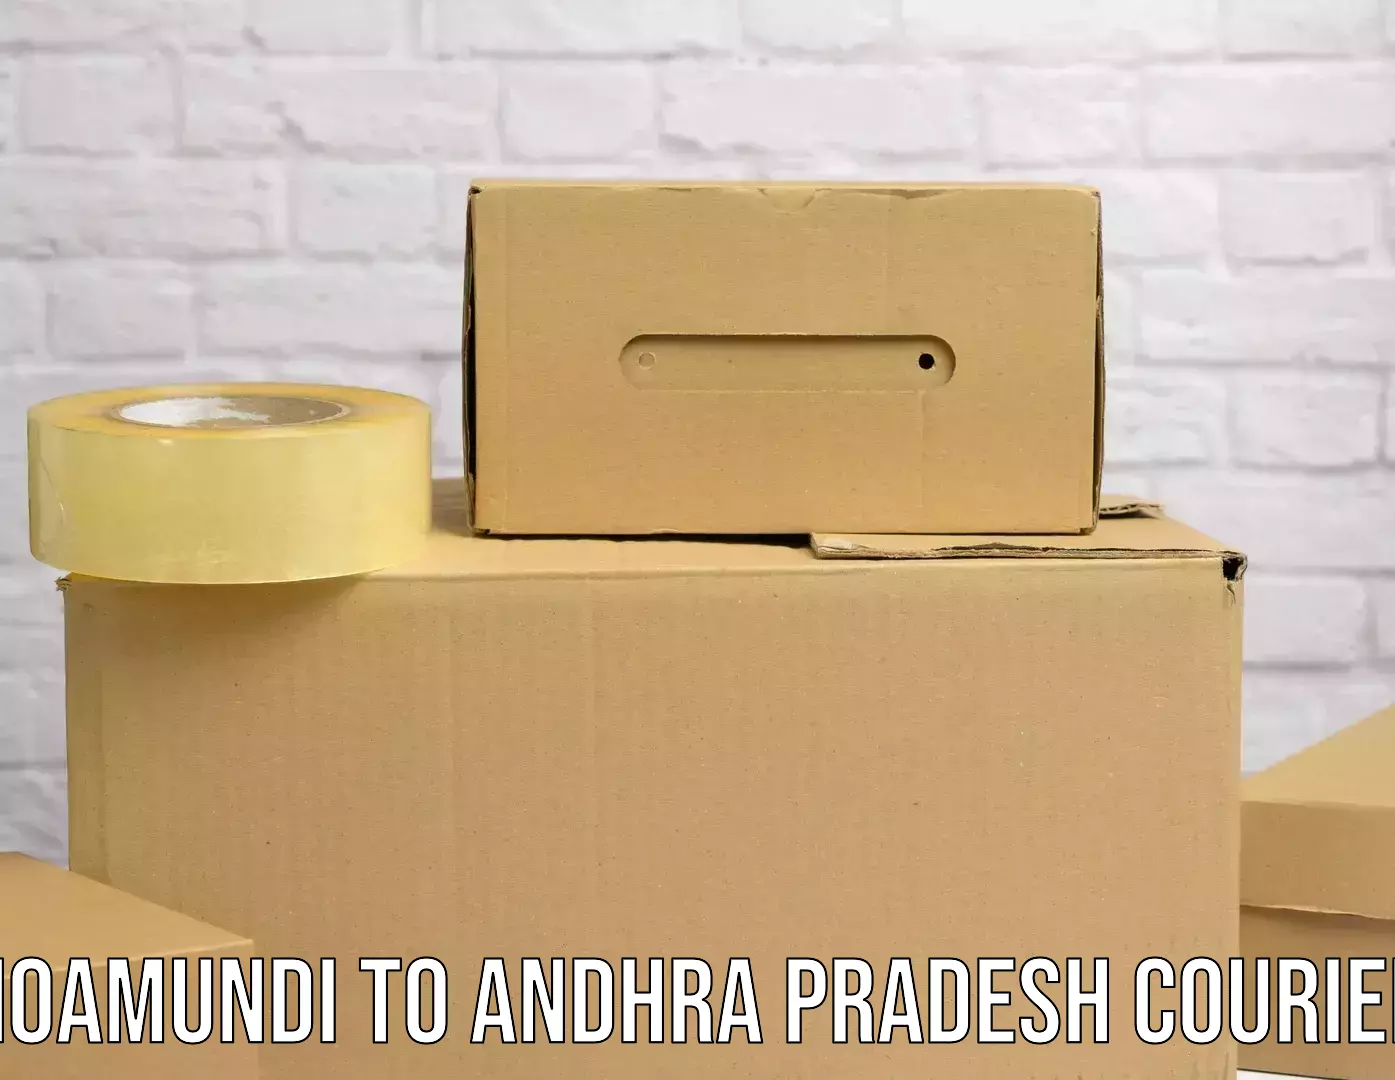 Easy return solutions Noamundi to Andhra Pradesh